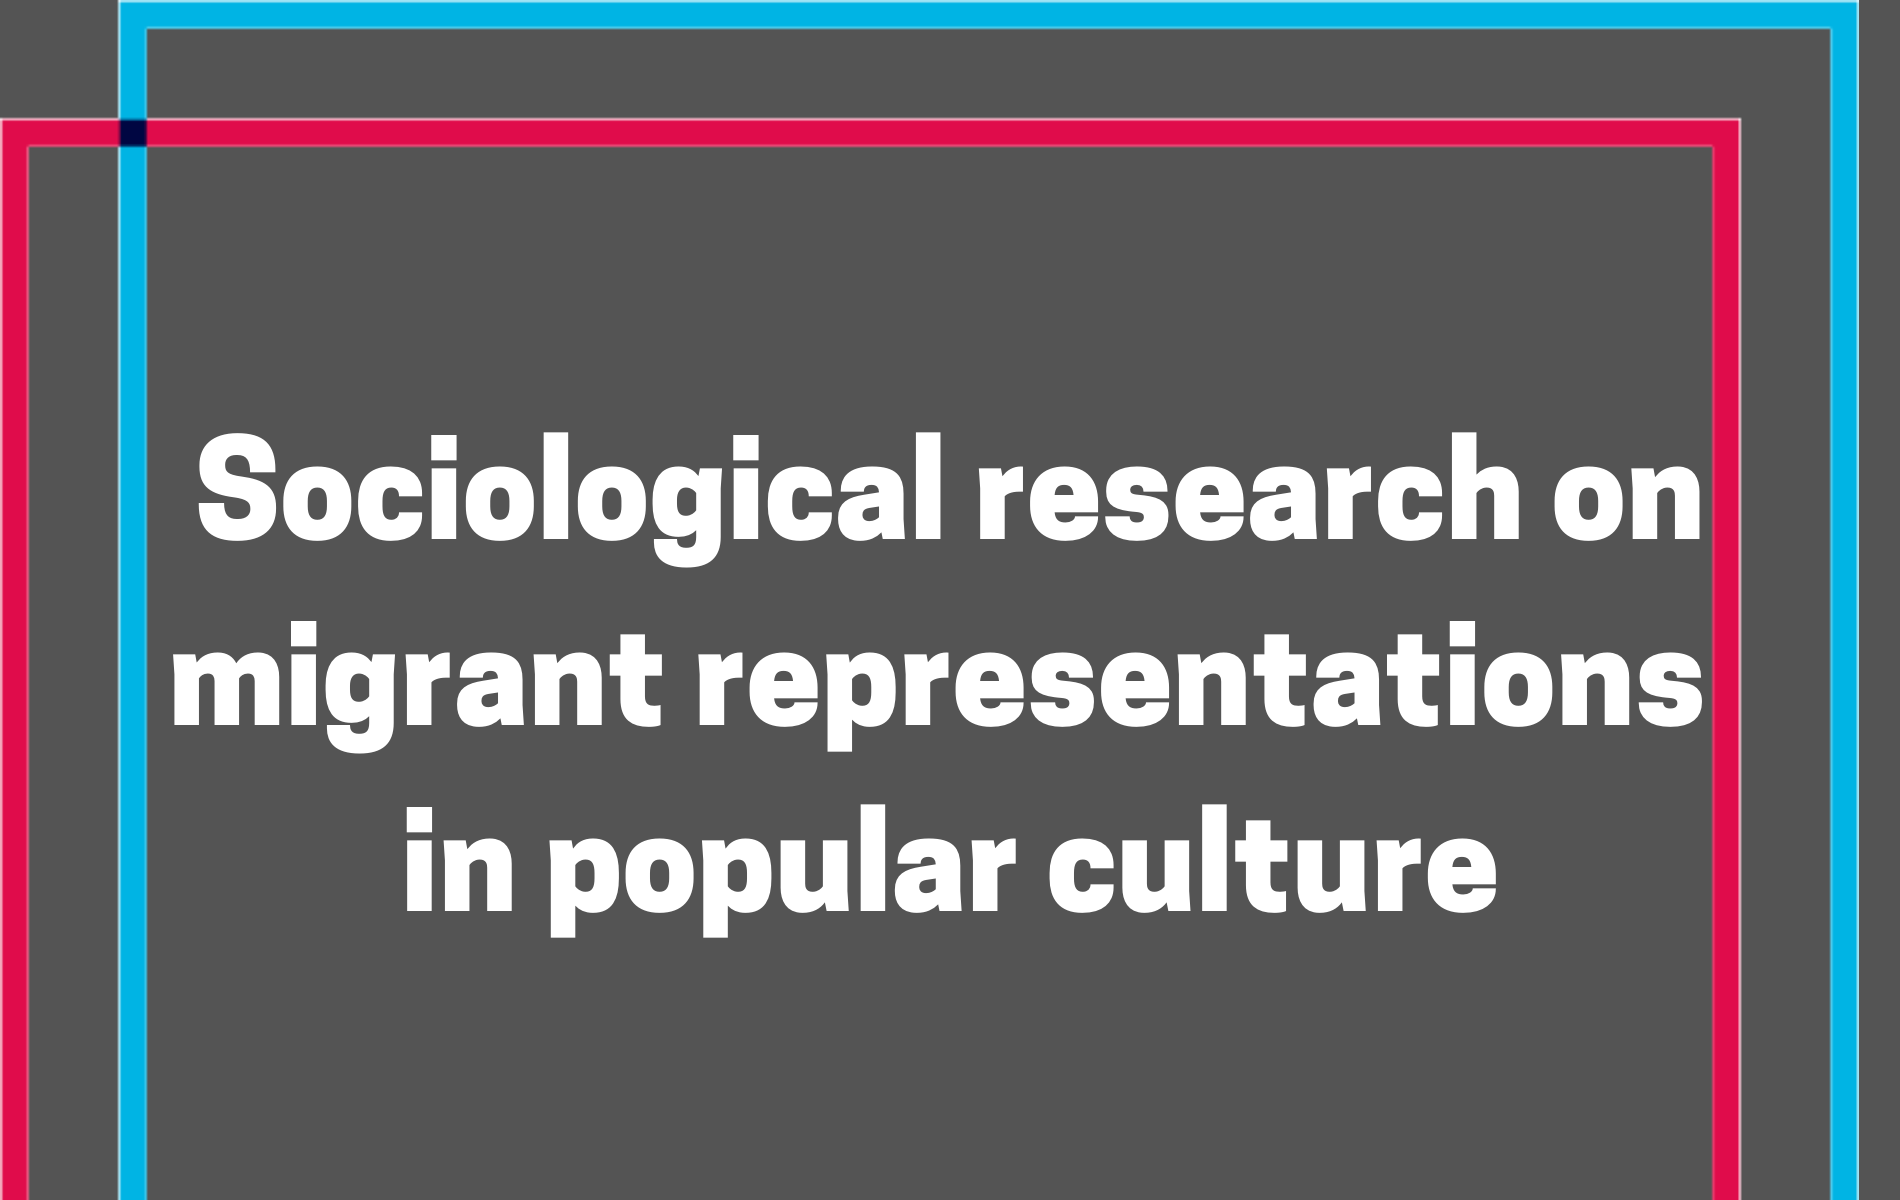 Migrant representations within popular culture